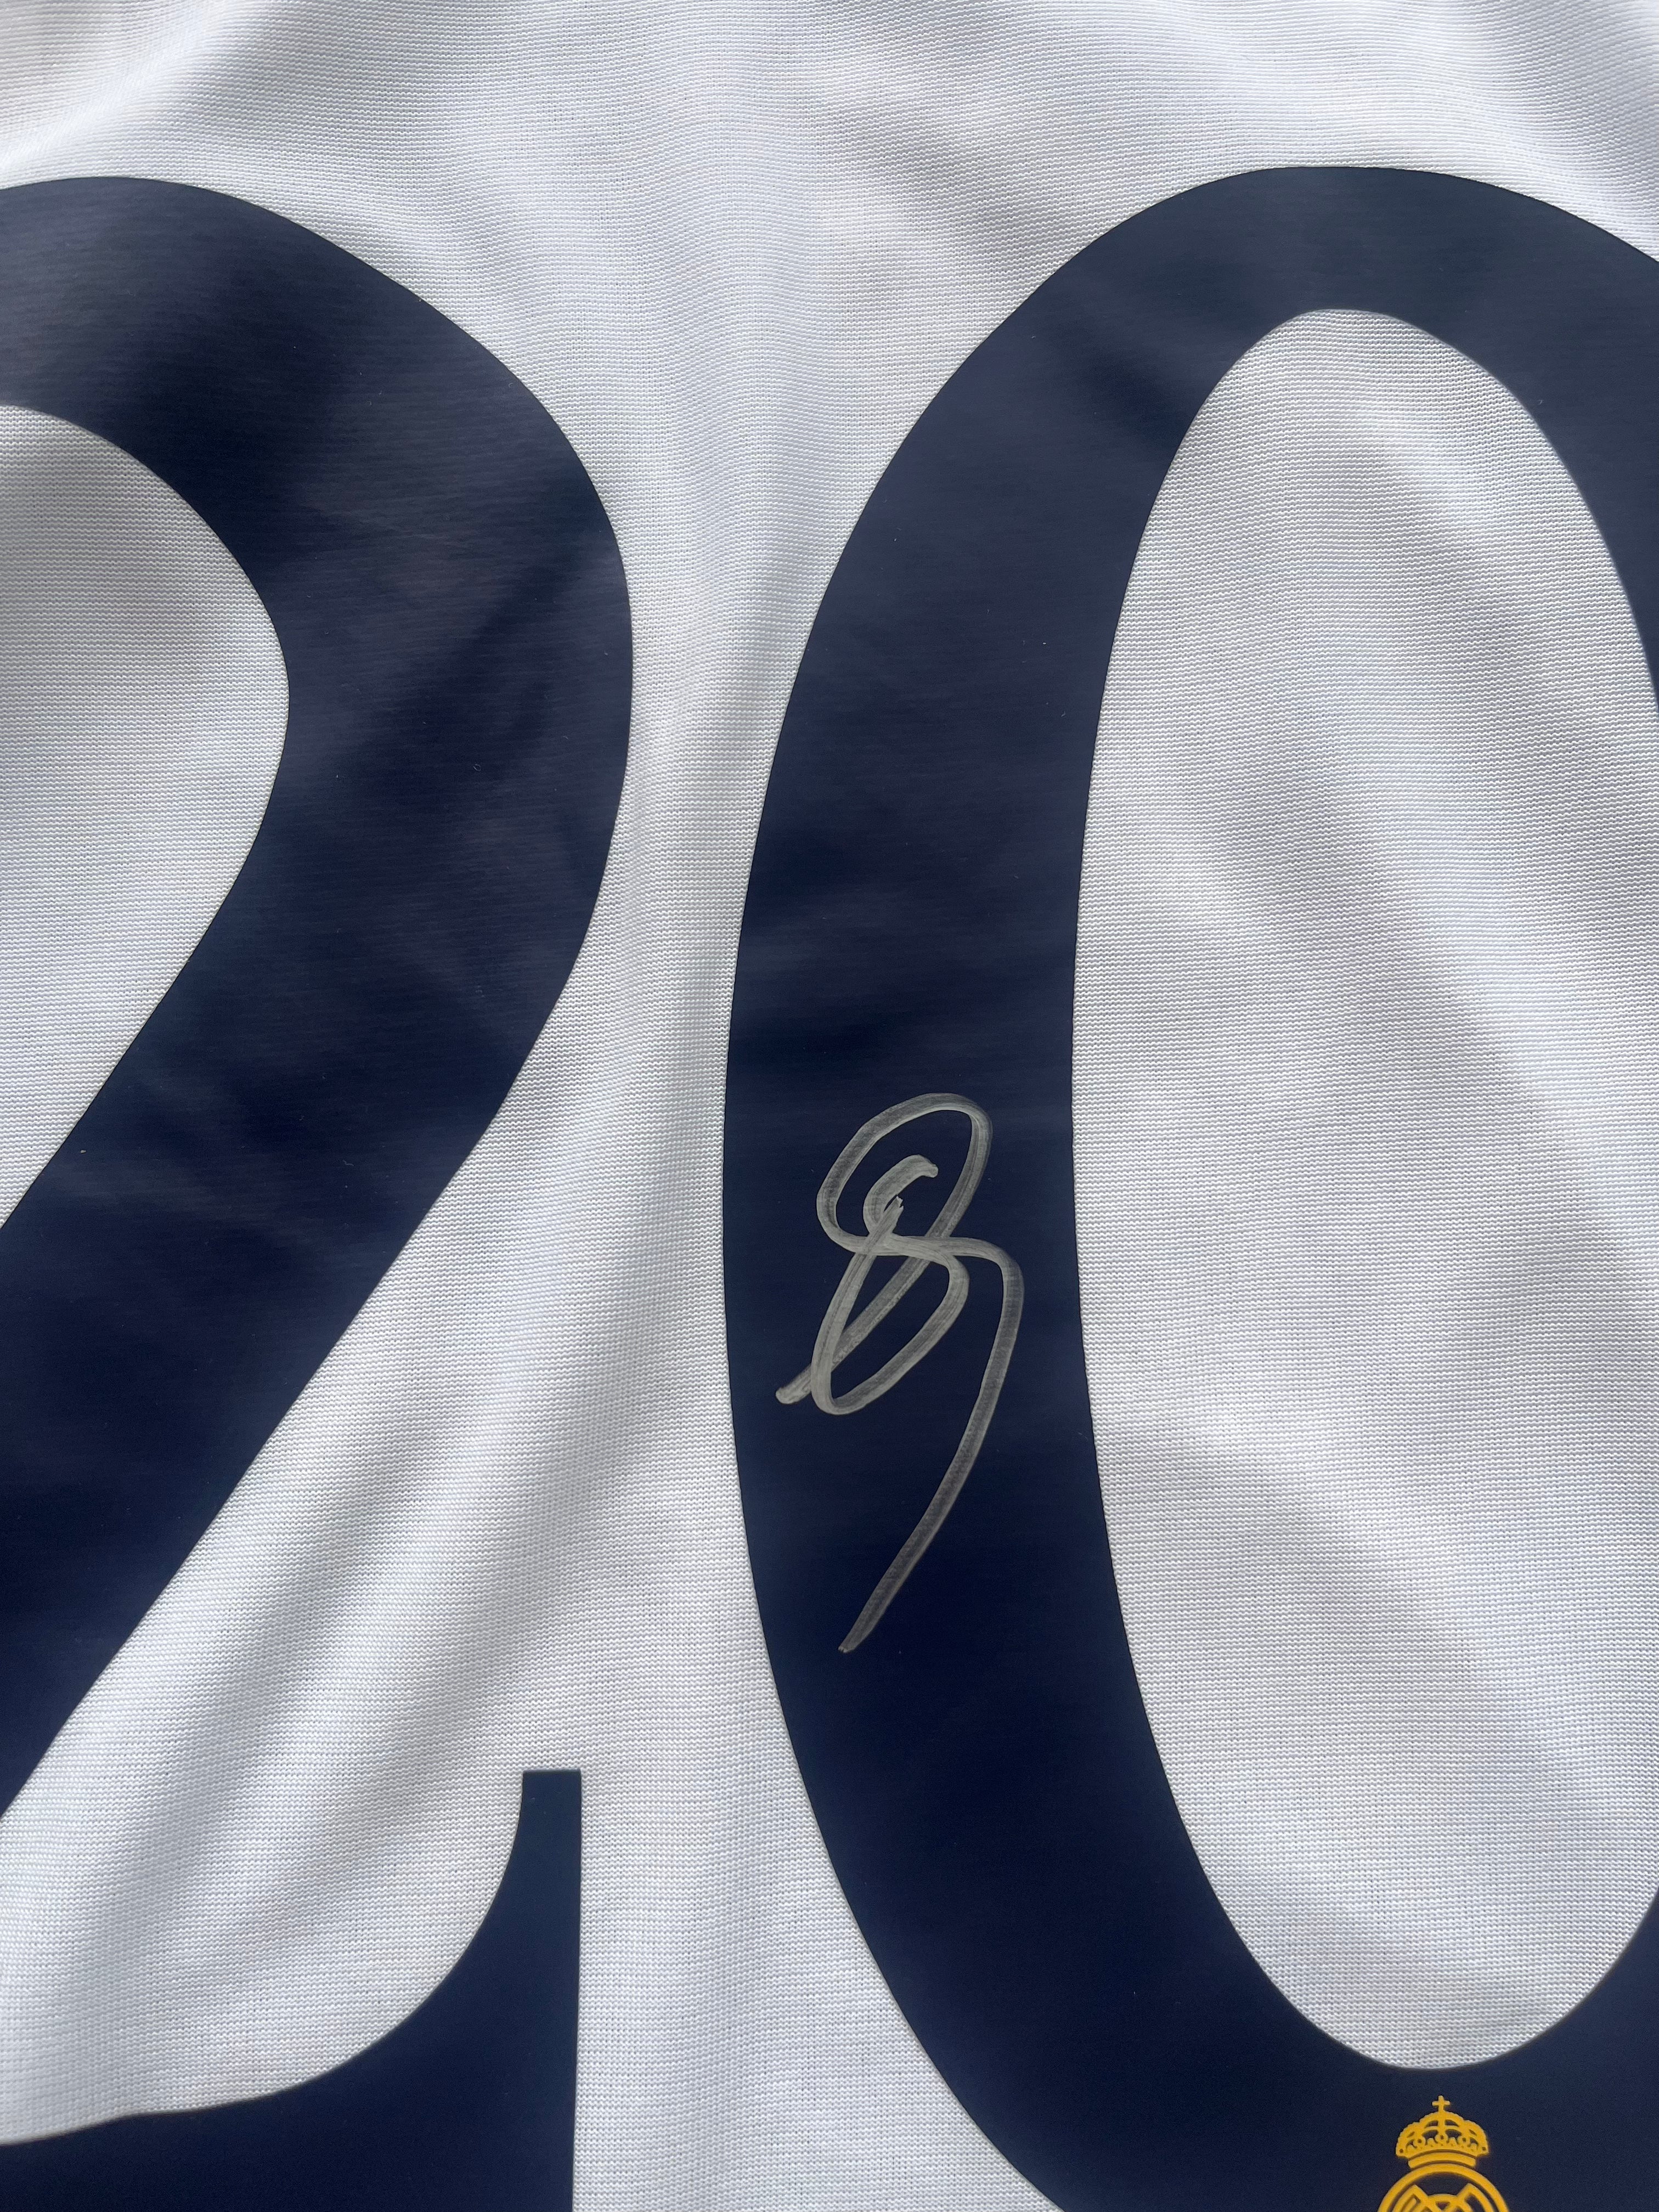 Signed Vini Jr Real Madrid 2023/2024 Shirt